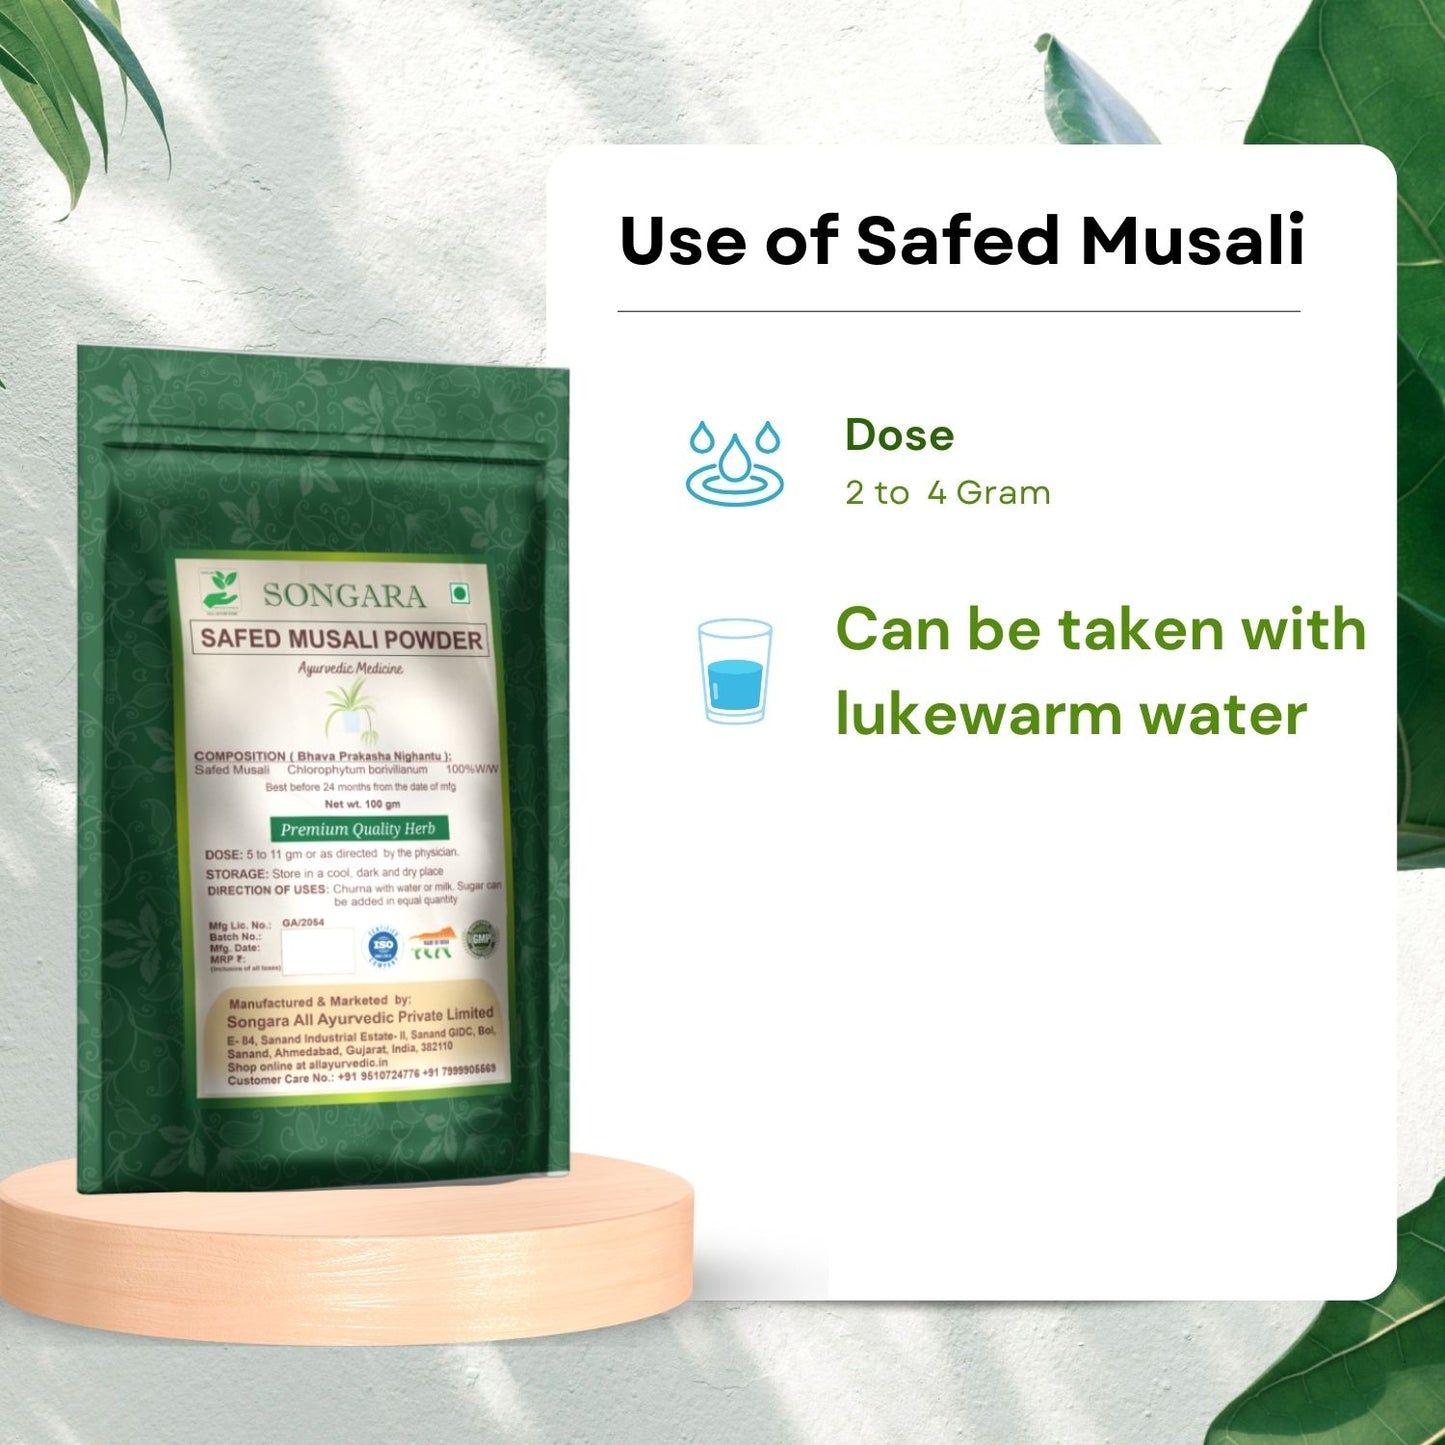 Songara Musali Powder : (Chlorophytum borivilianum) Premium Quality, Wellness Support